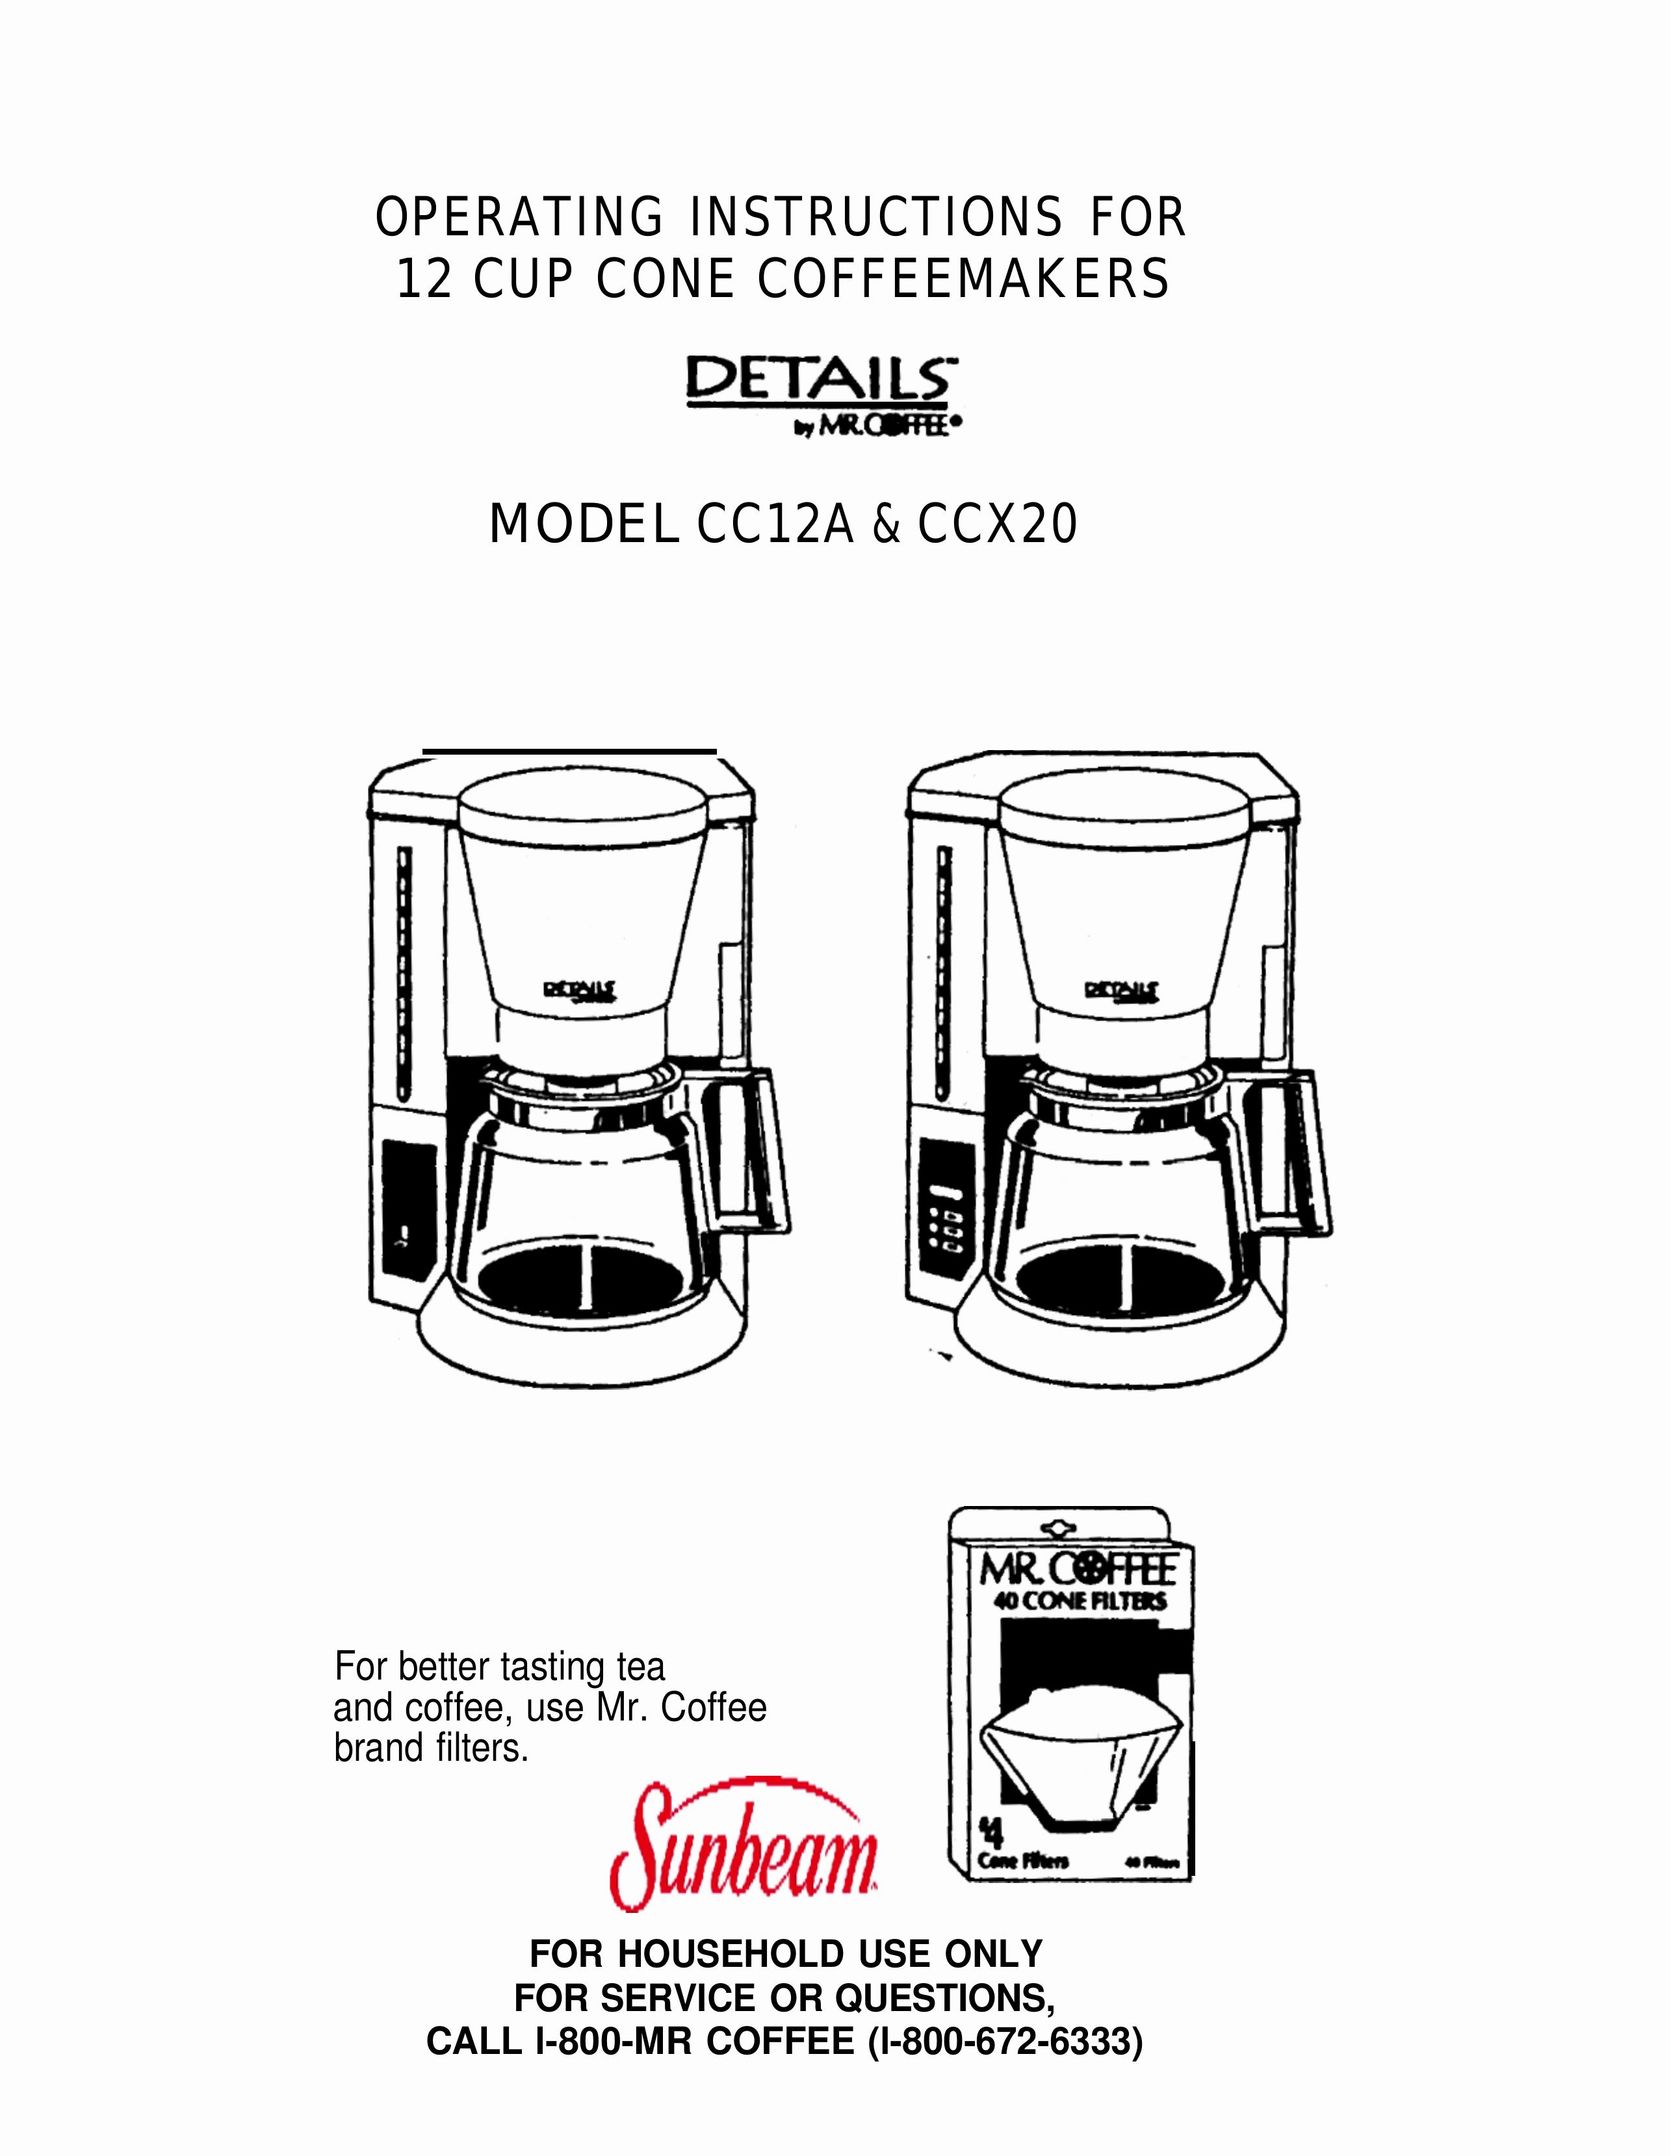 Mr. Coffee CC12A Coffeemaker User Manual